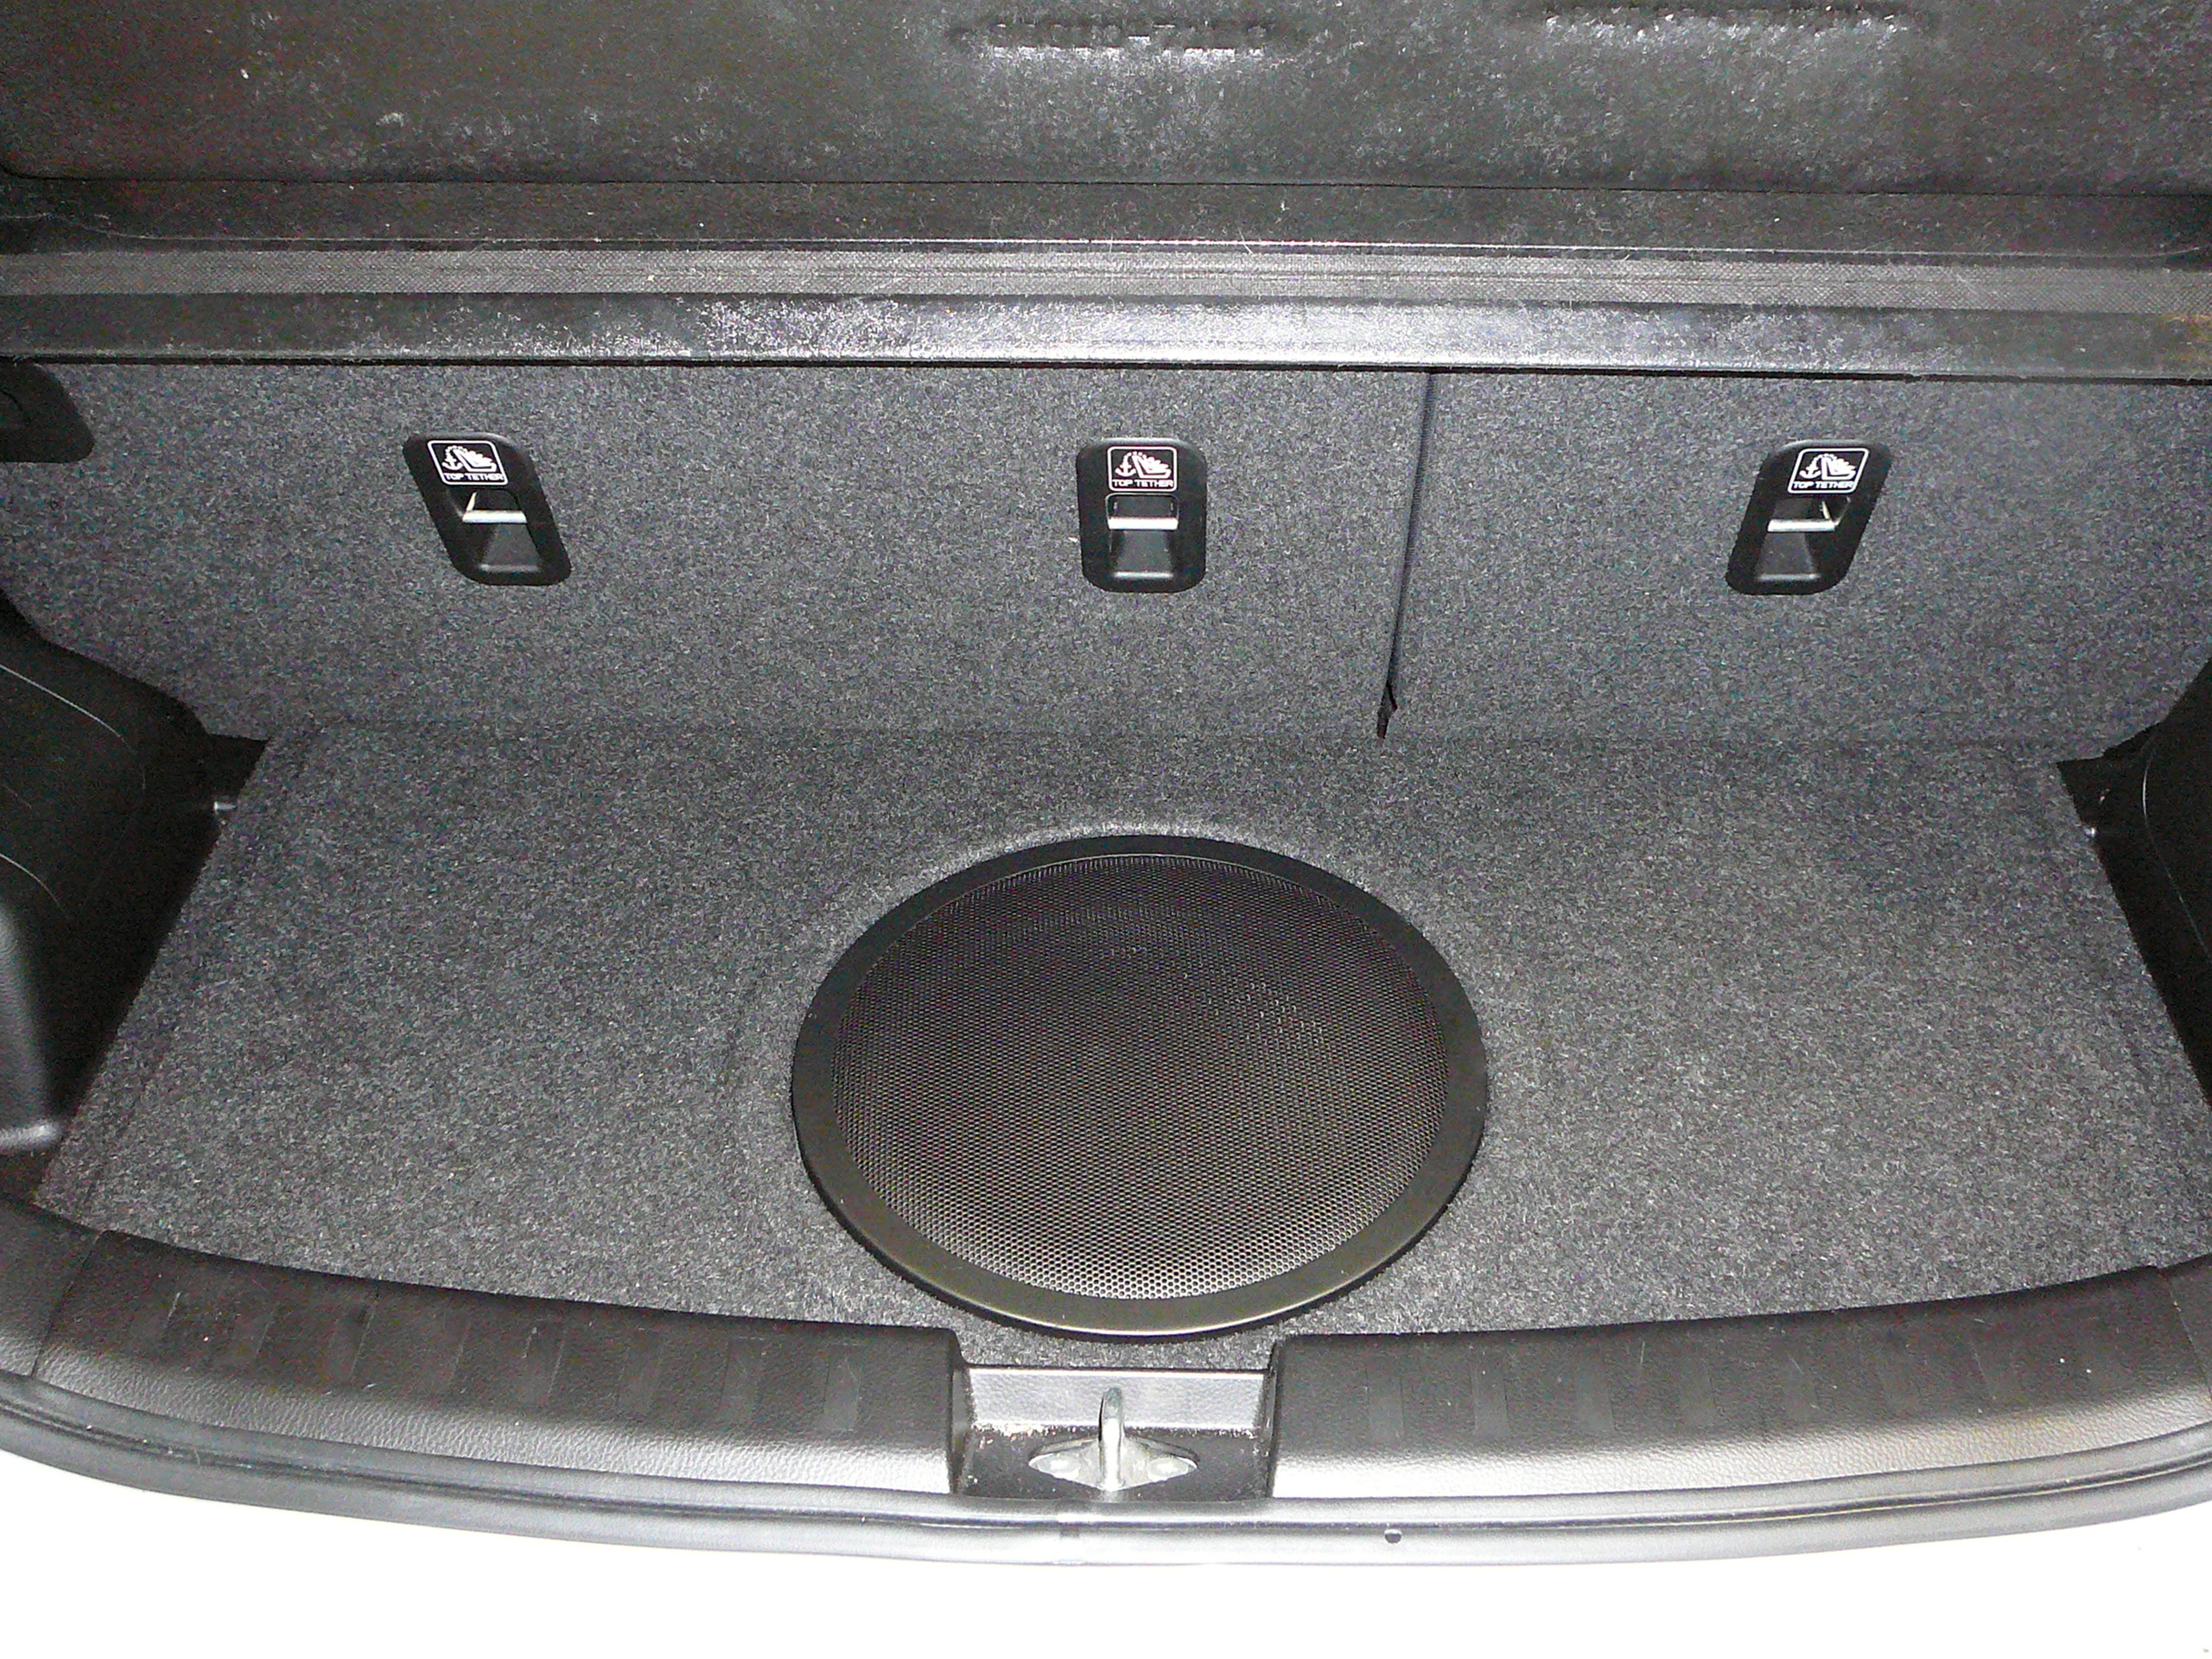 Suzuki Swift 2012, Custom Subwoofer Enclosure and Alpine Audio Visual Double Din Unit